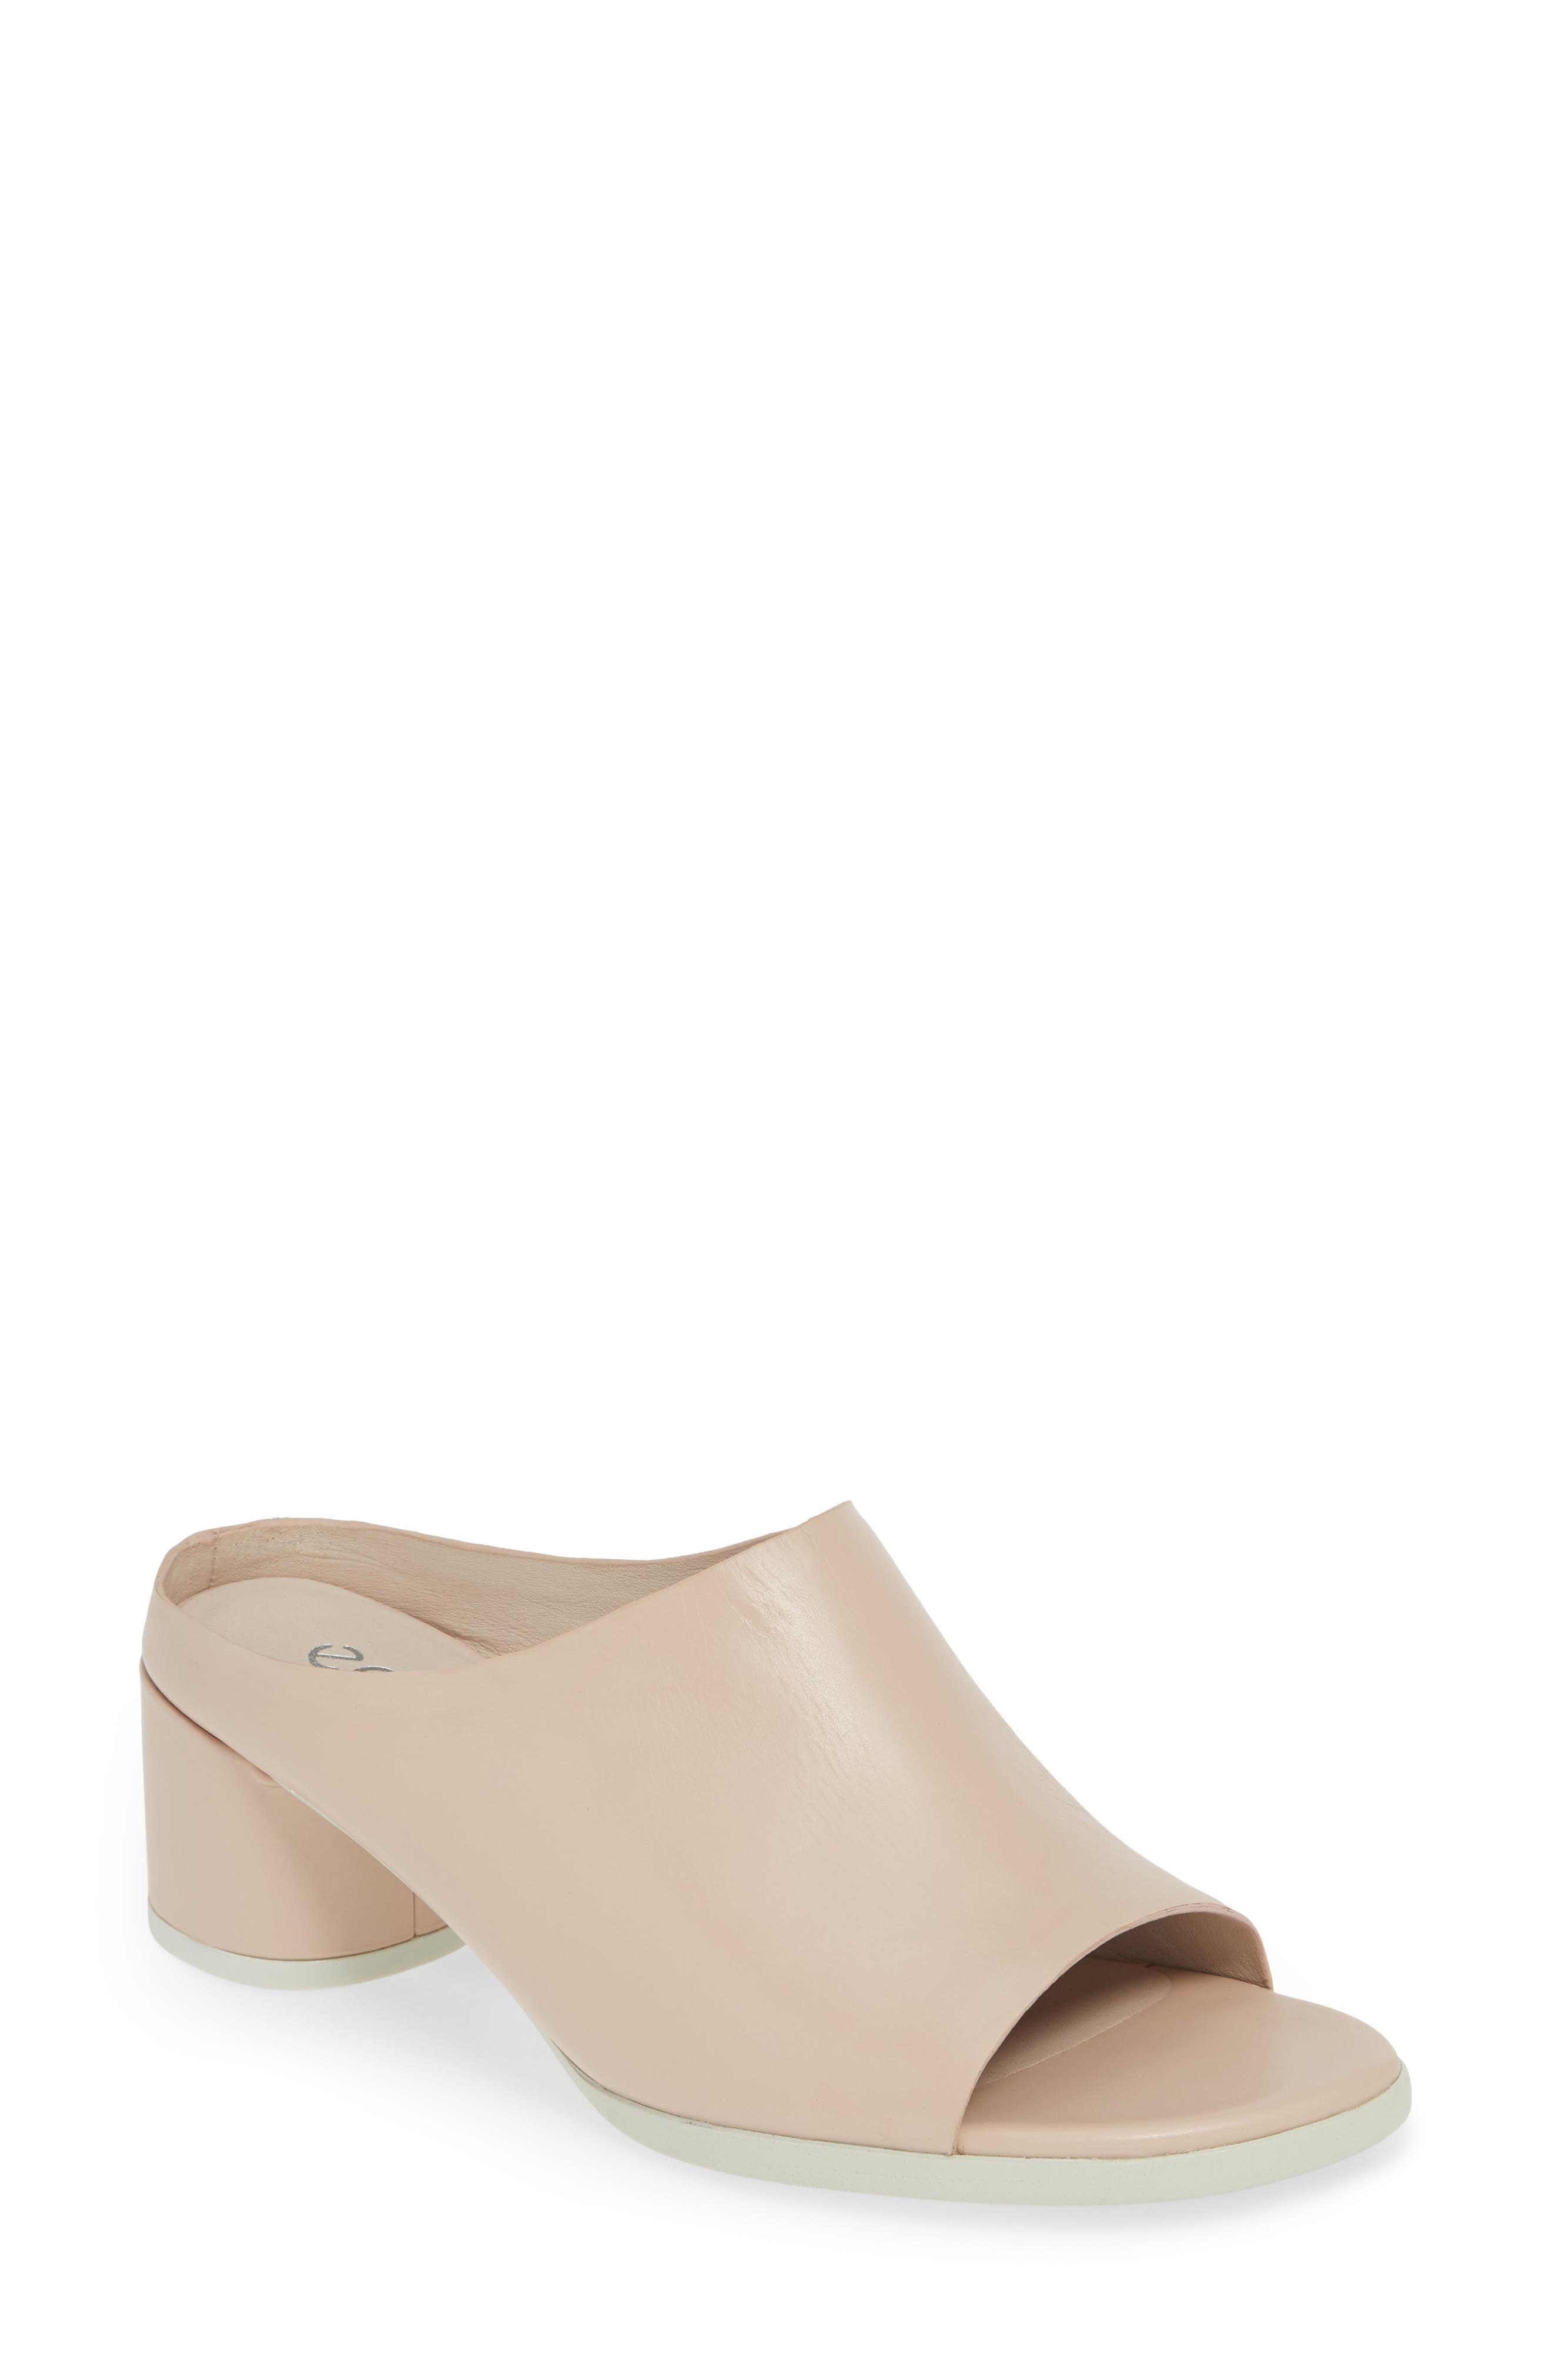 UPC 825840000559 product image for Women's Ecco Shape 45 Block Heel Slide Sandal, Size 7-7.5US / 38EU - Pink | upcitemdb.com